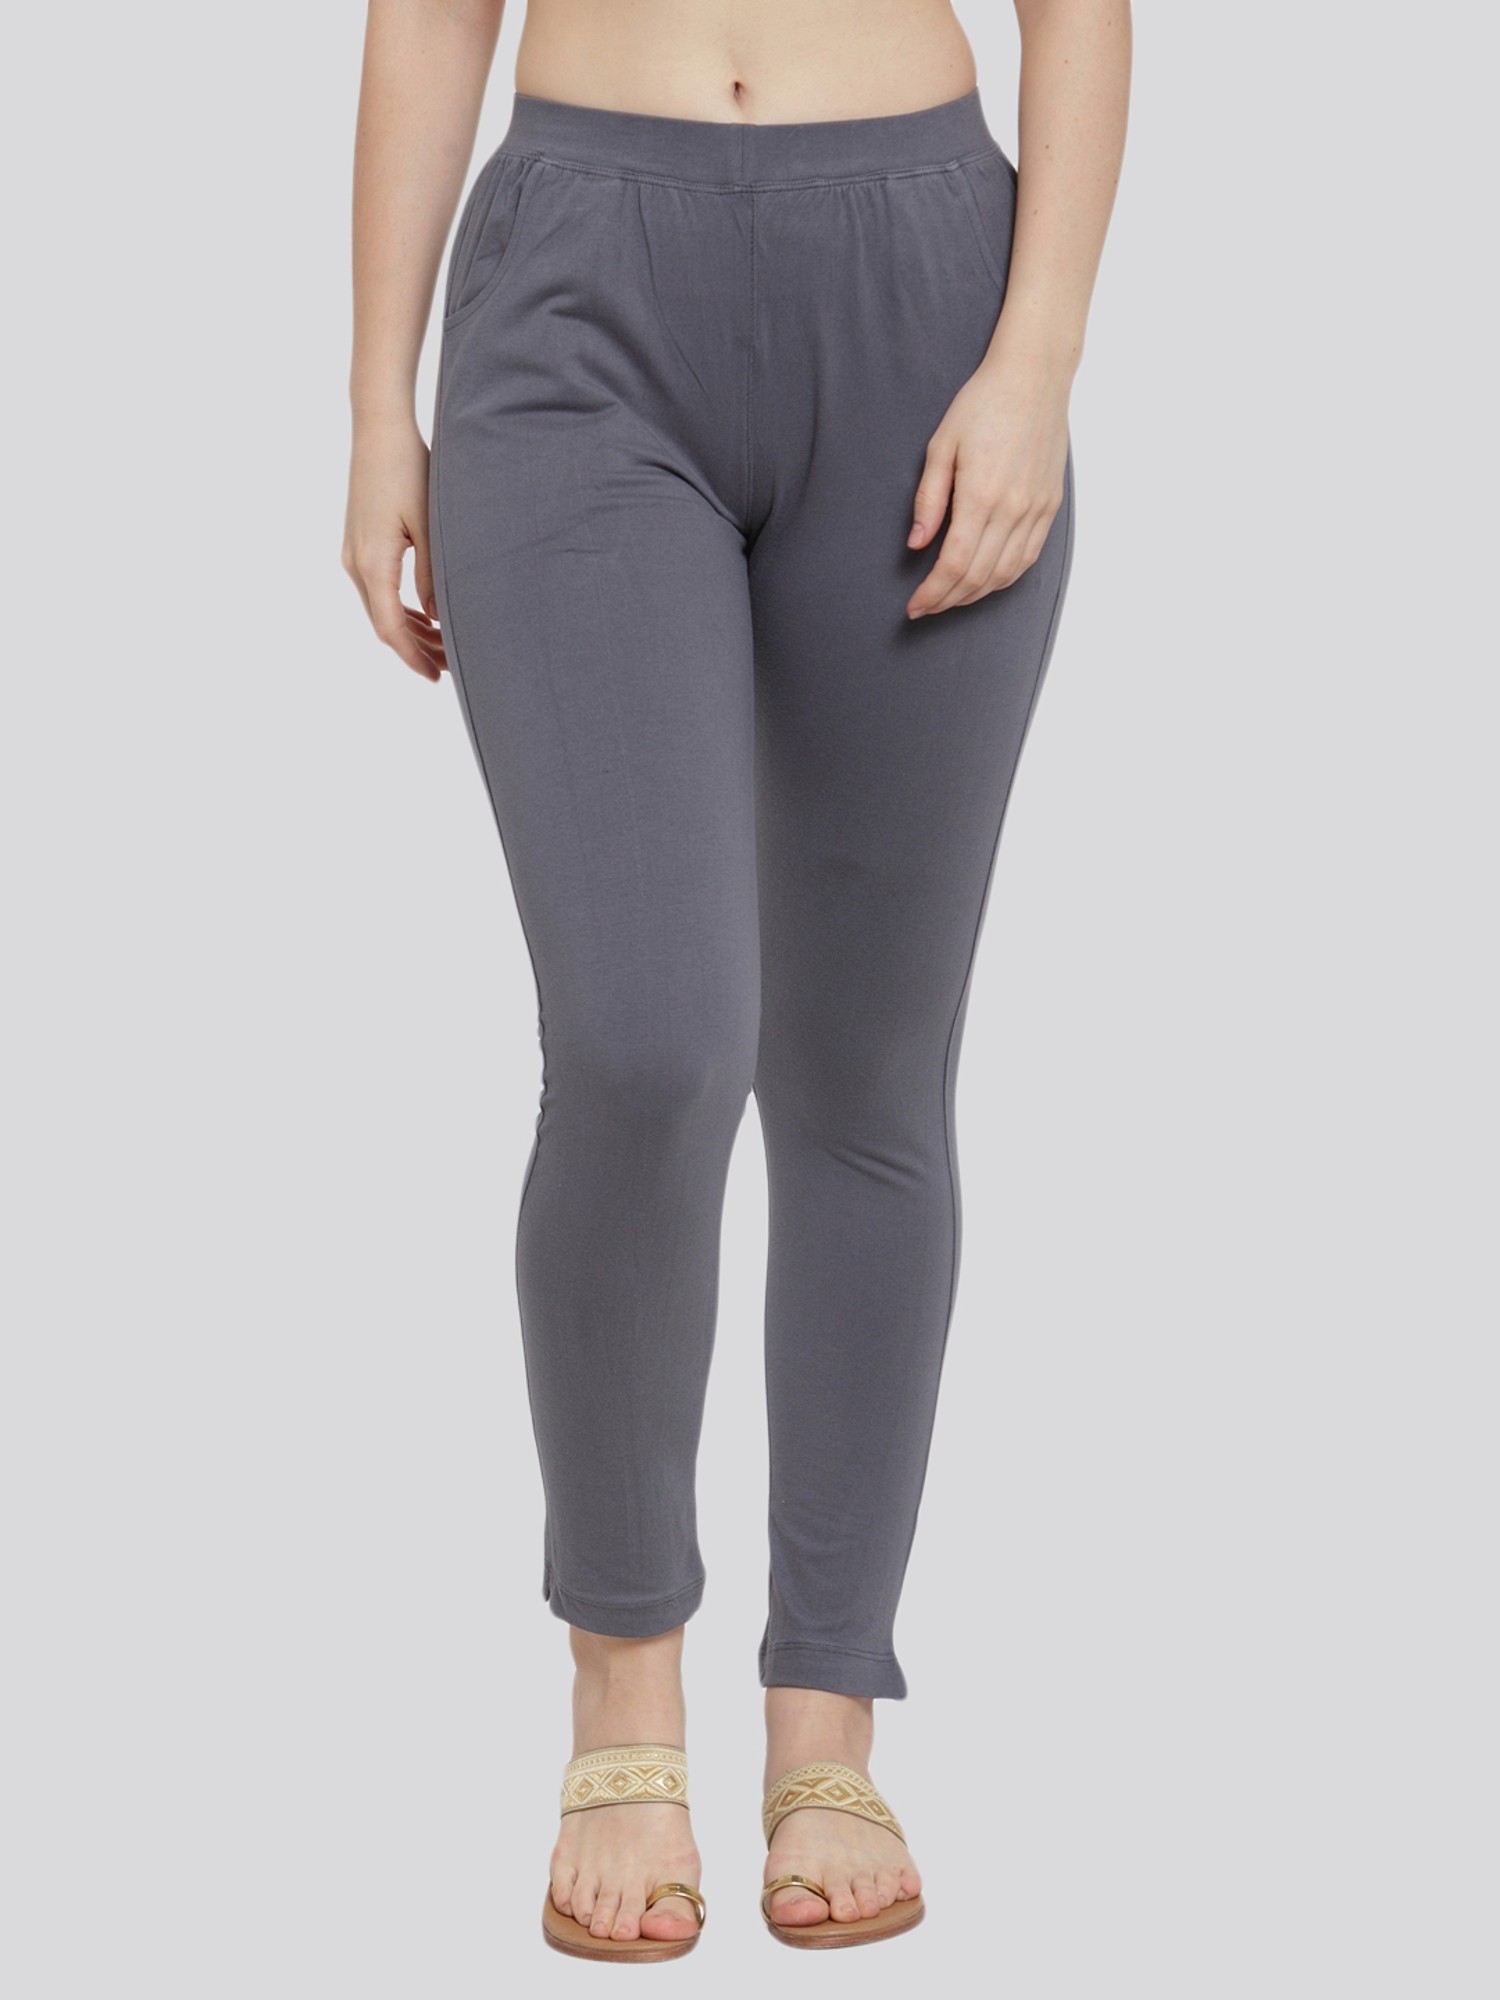 Buy TAG 7 Grey Cotton Leggings for Women Online @ Tata CLiQ